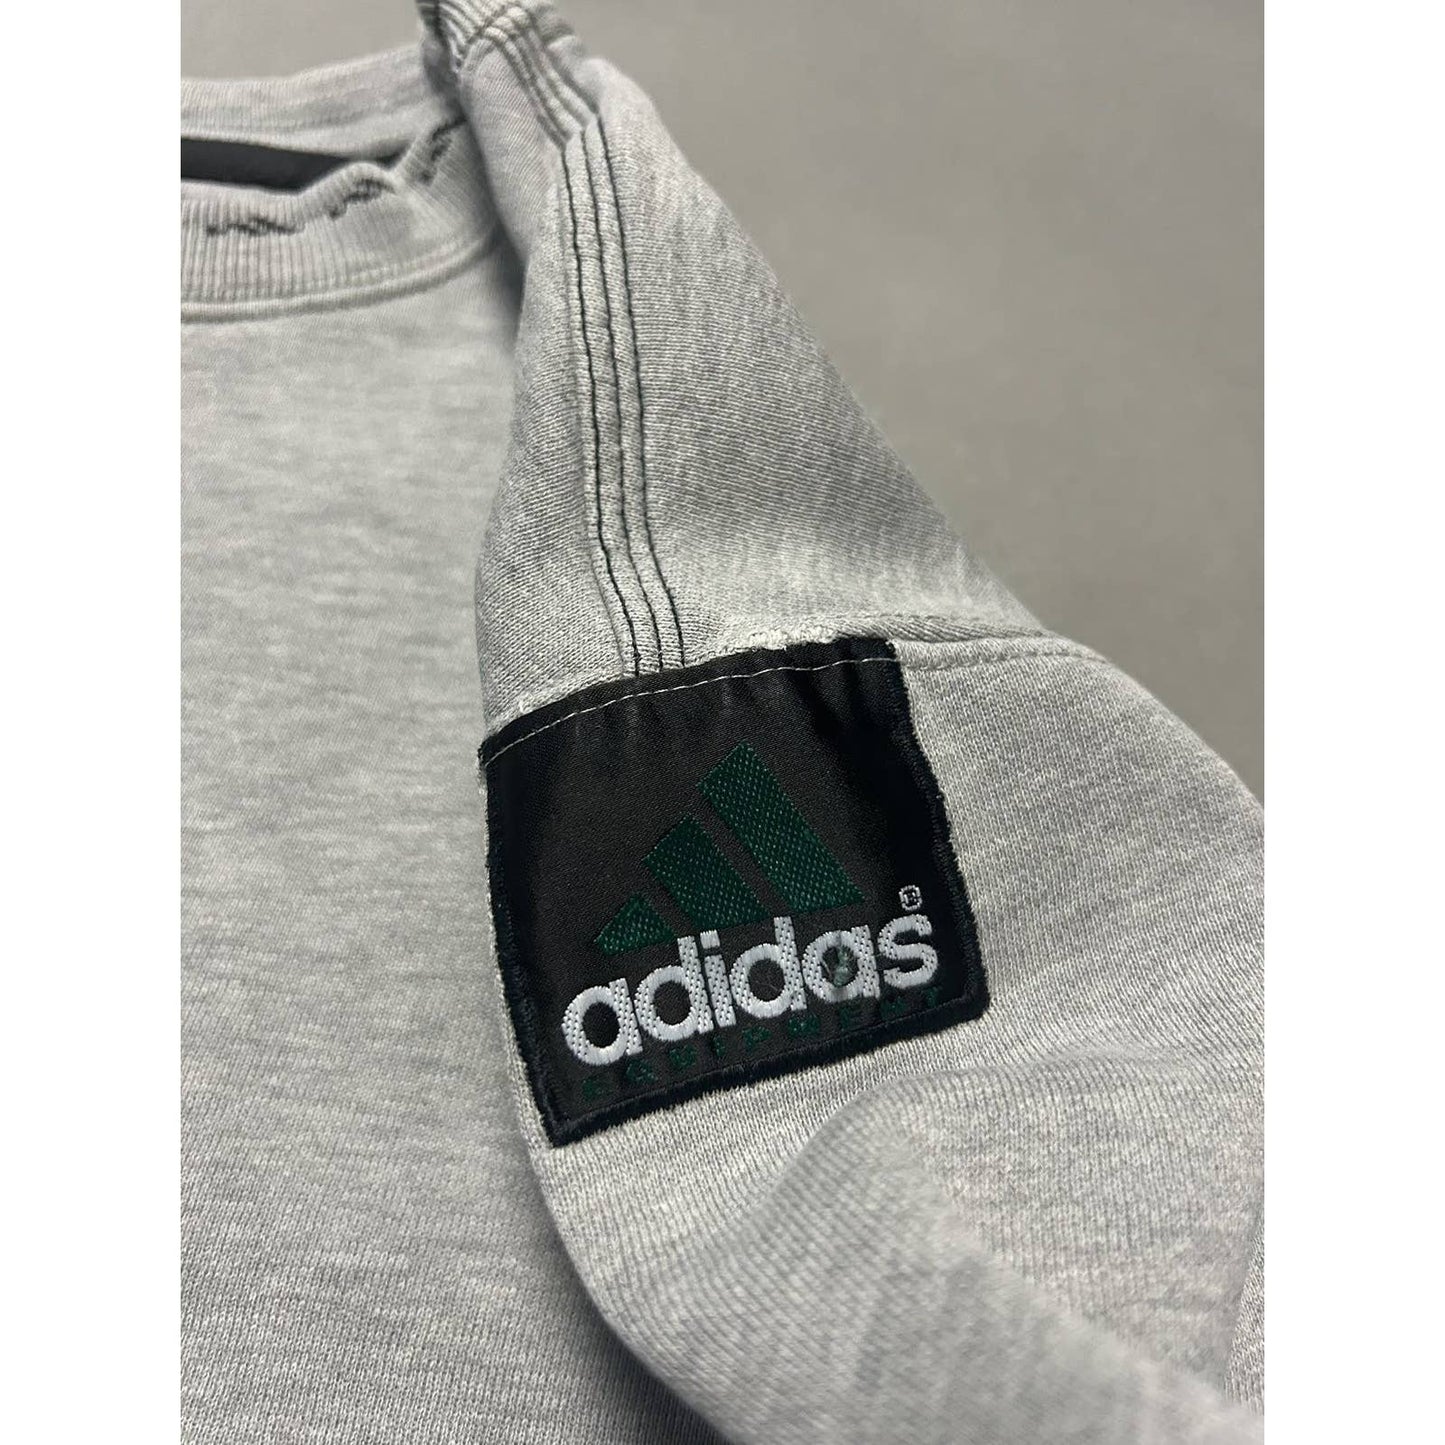 Adidas Equipment vintage grey big logo sweatshirt 90s